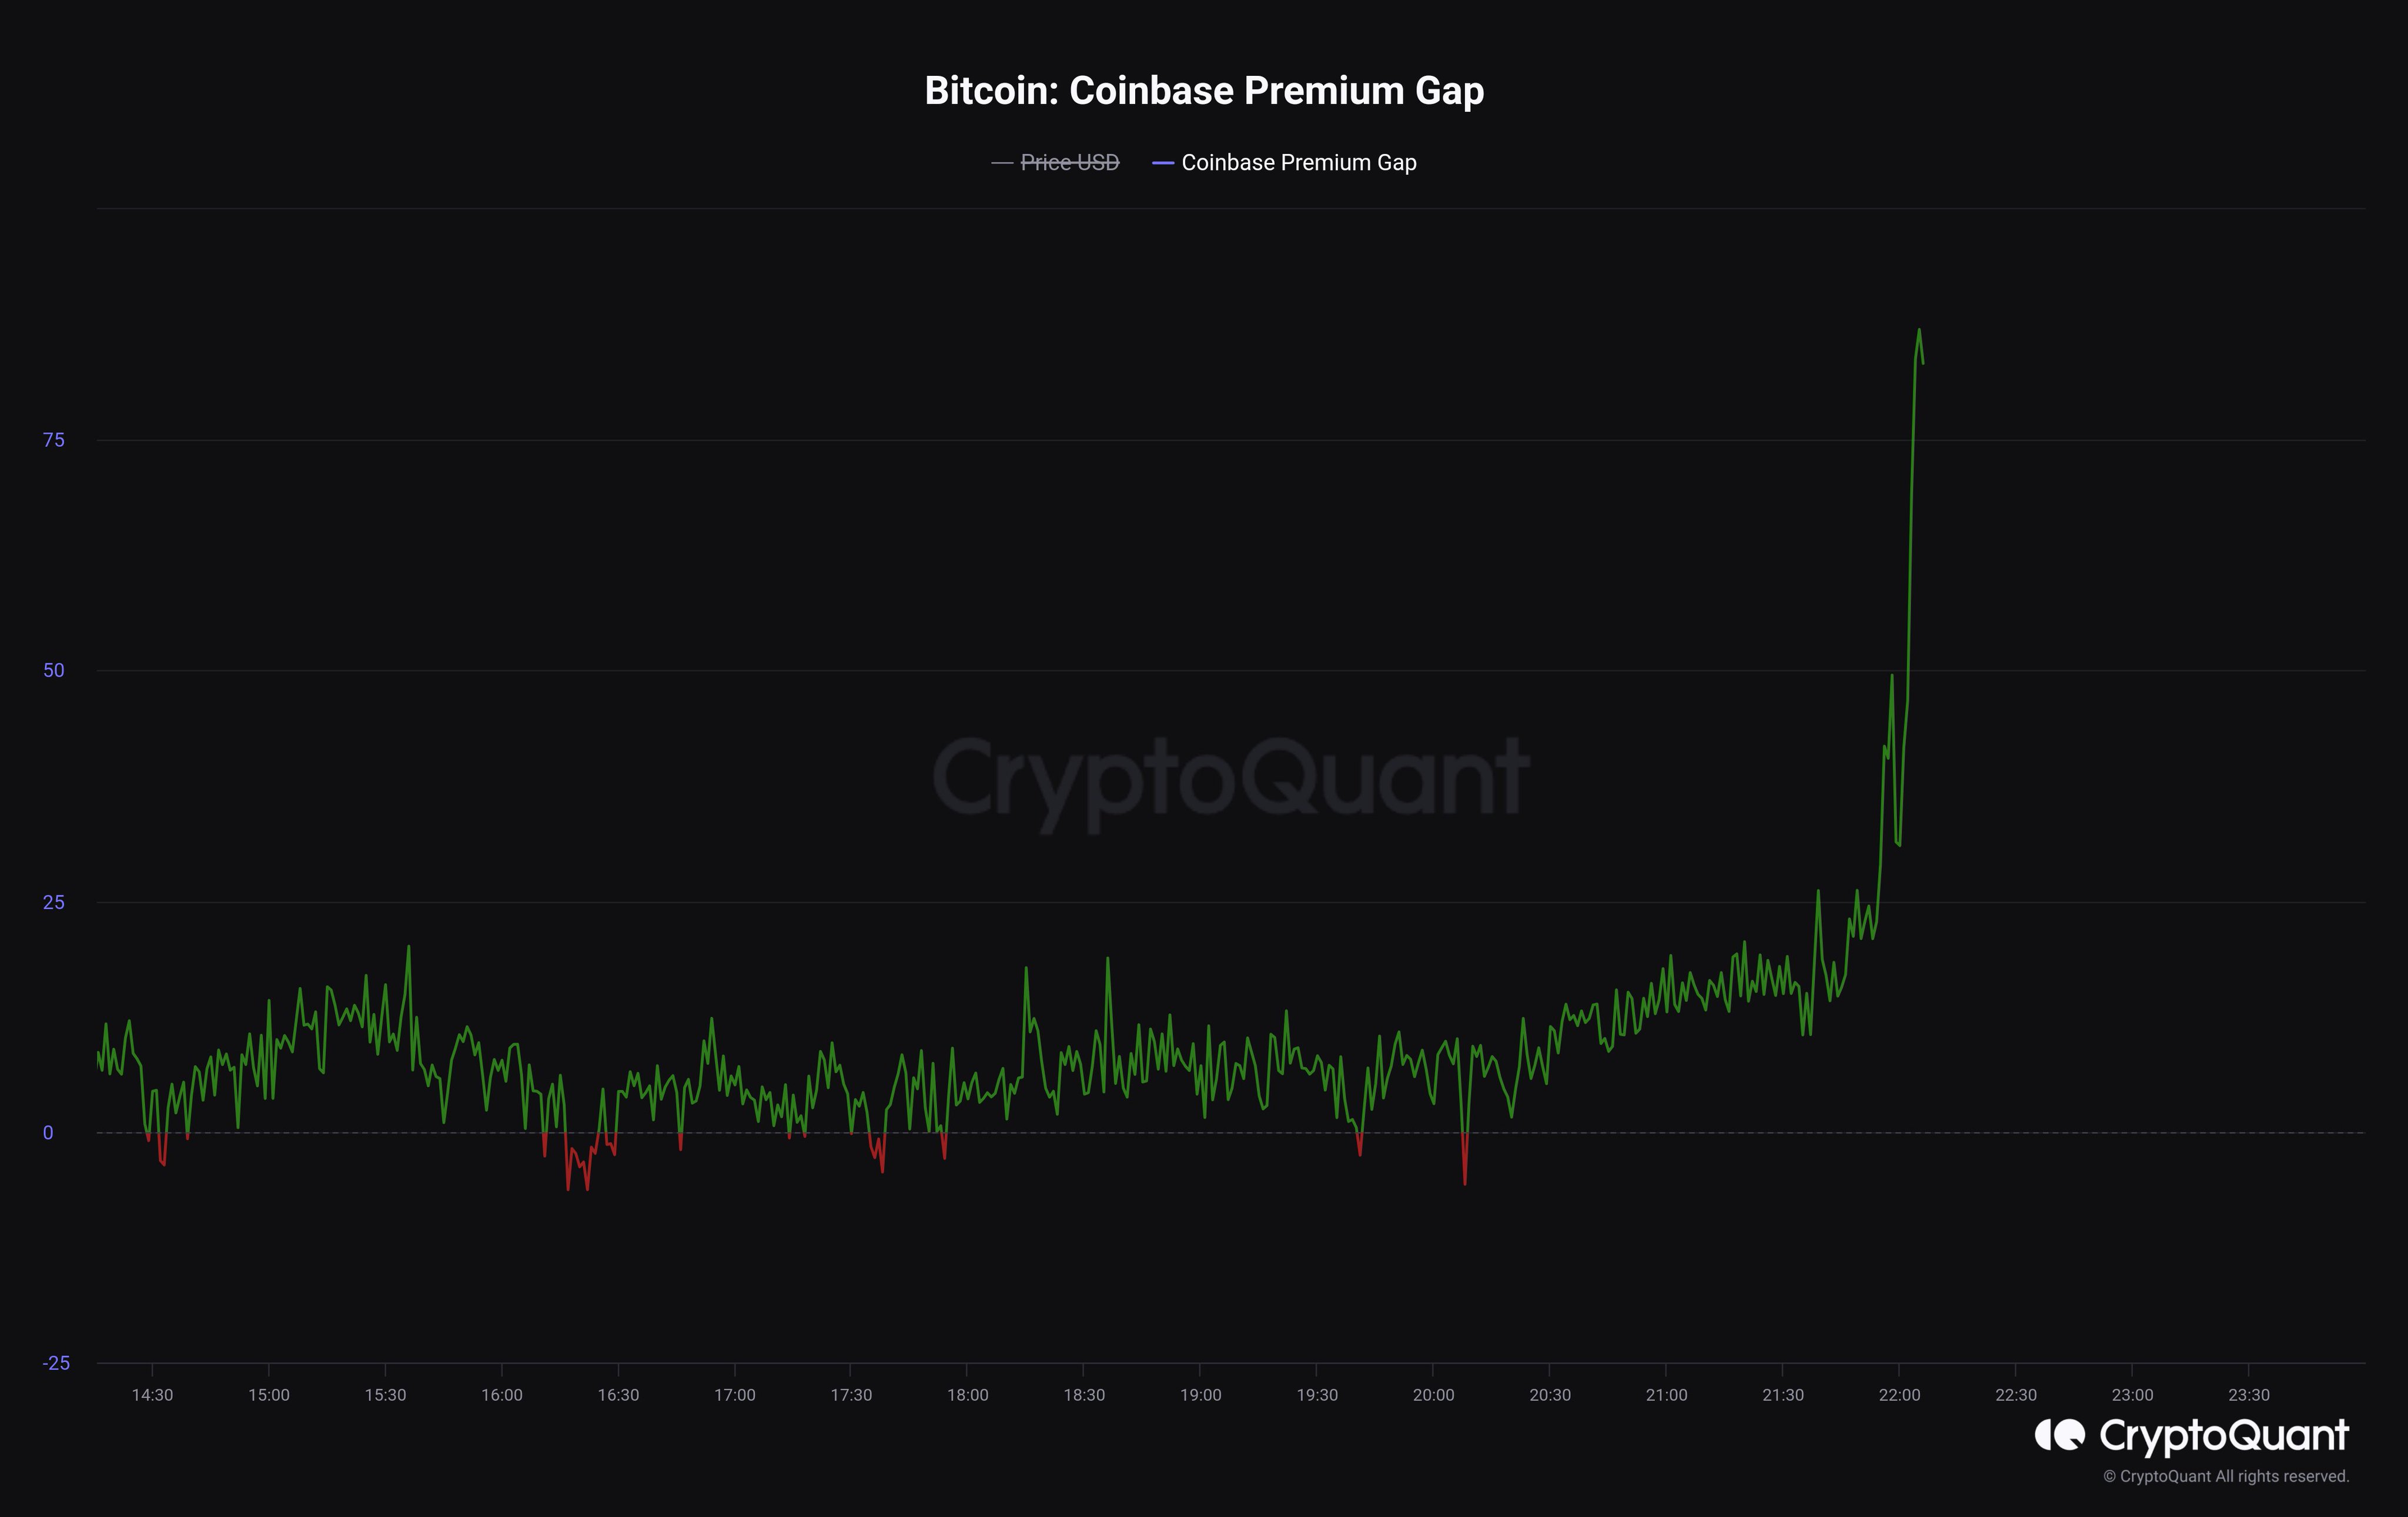  bitcoin gap premium coinbase cryptoquant netherlands community 